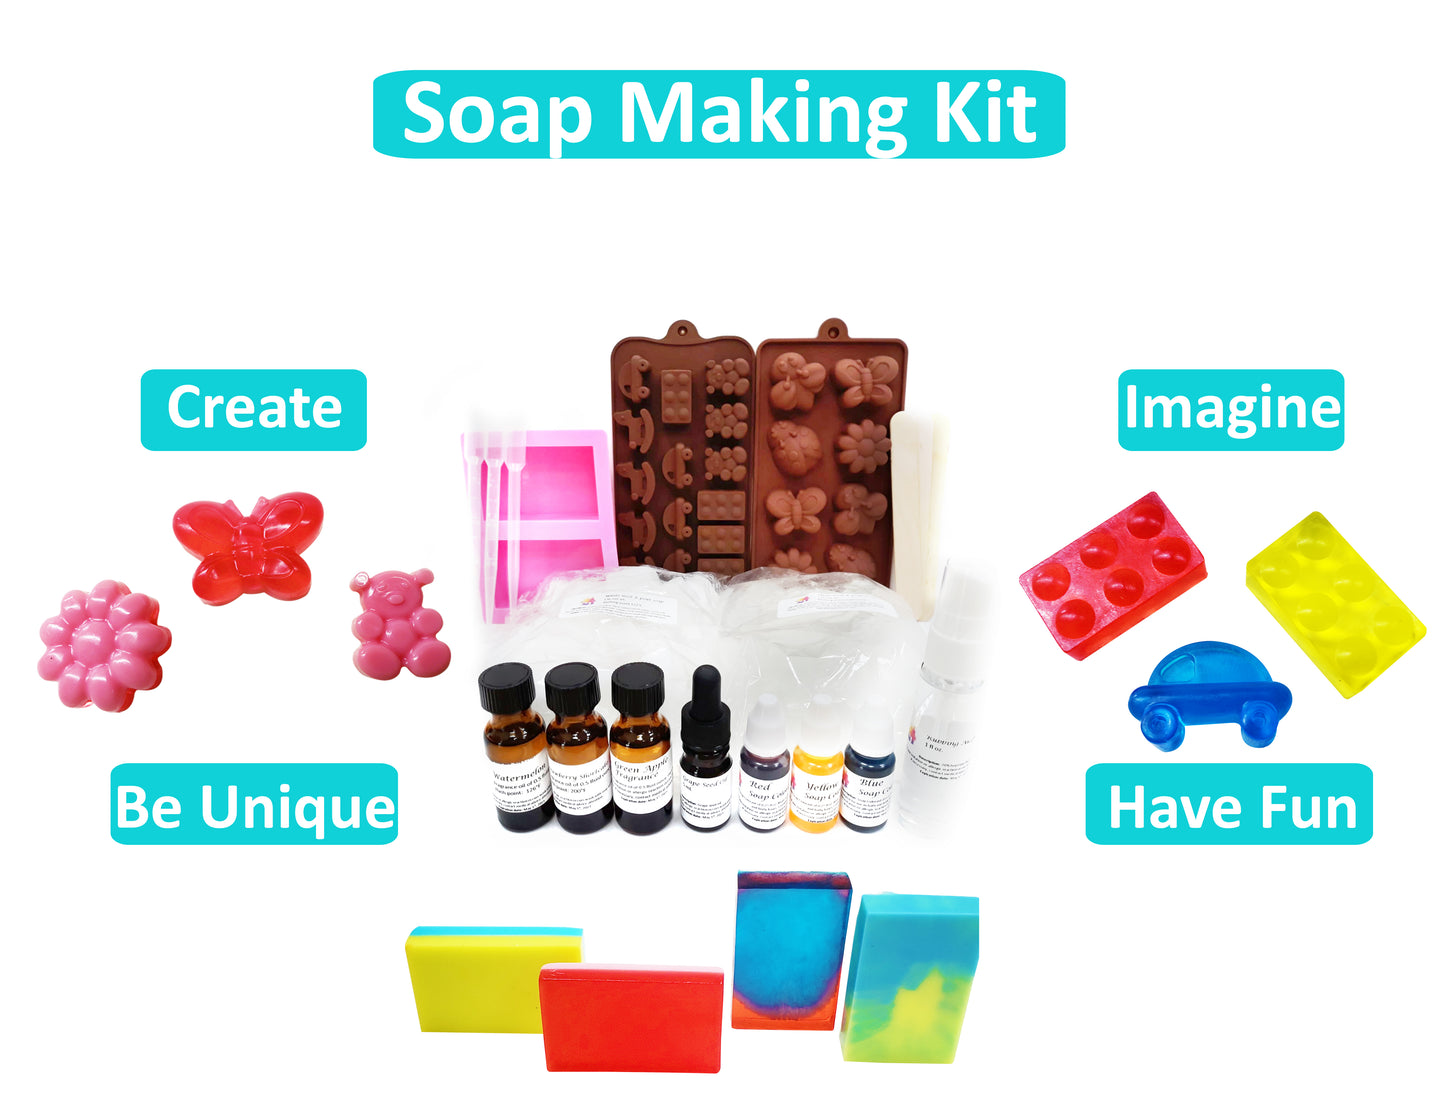 Camilo's Soap Making Kit